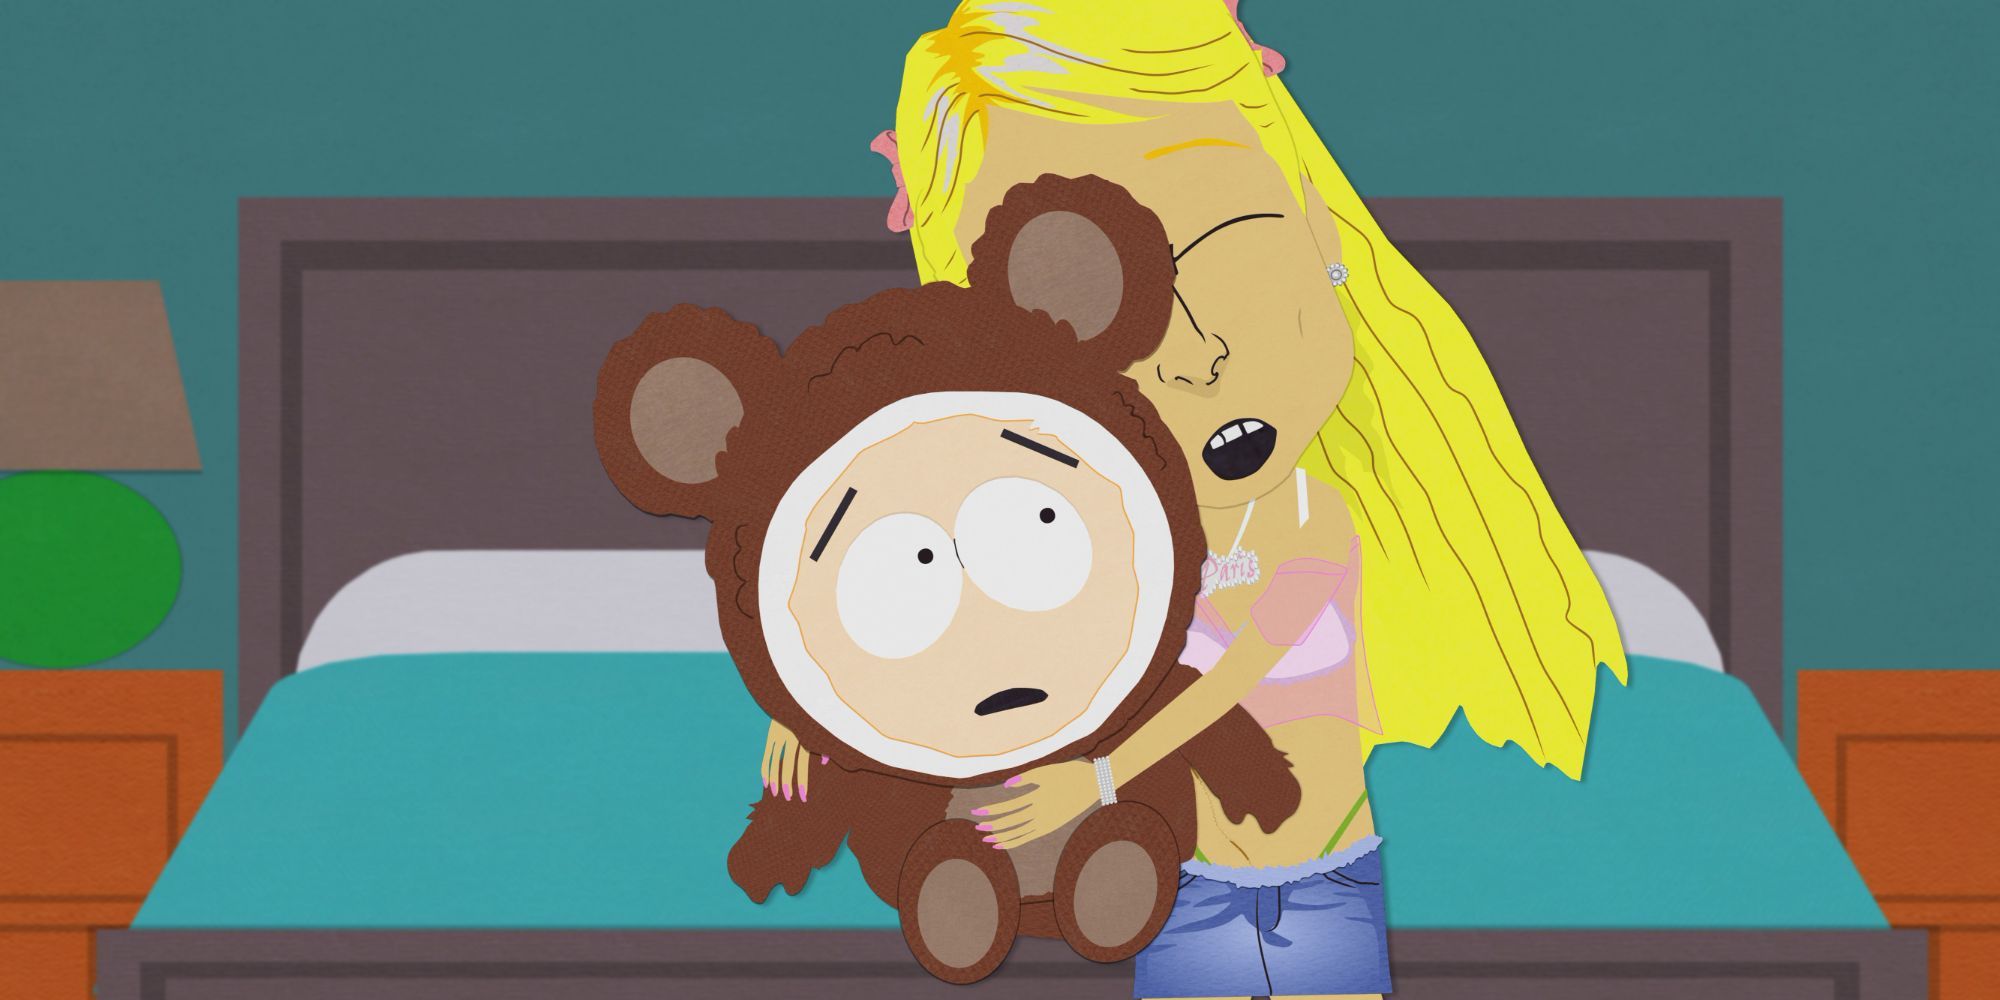 Paris Hilton hugs Butters dressed as a teddy bear in South Park